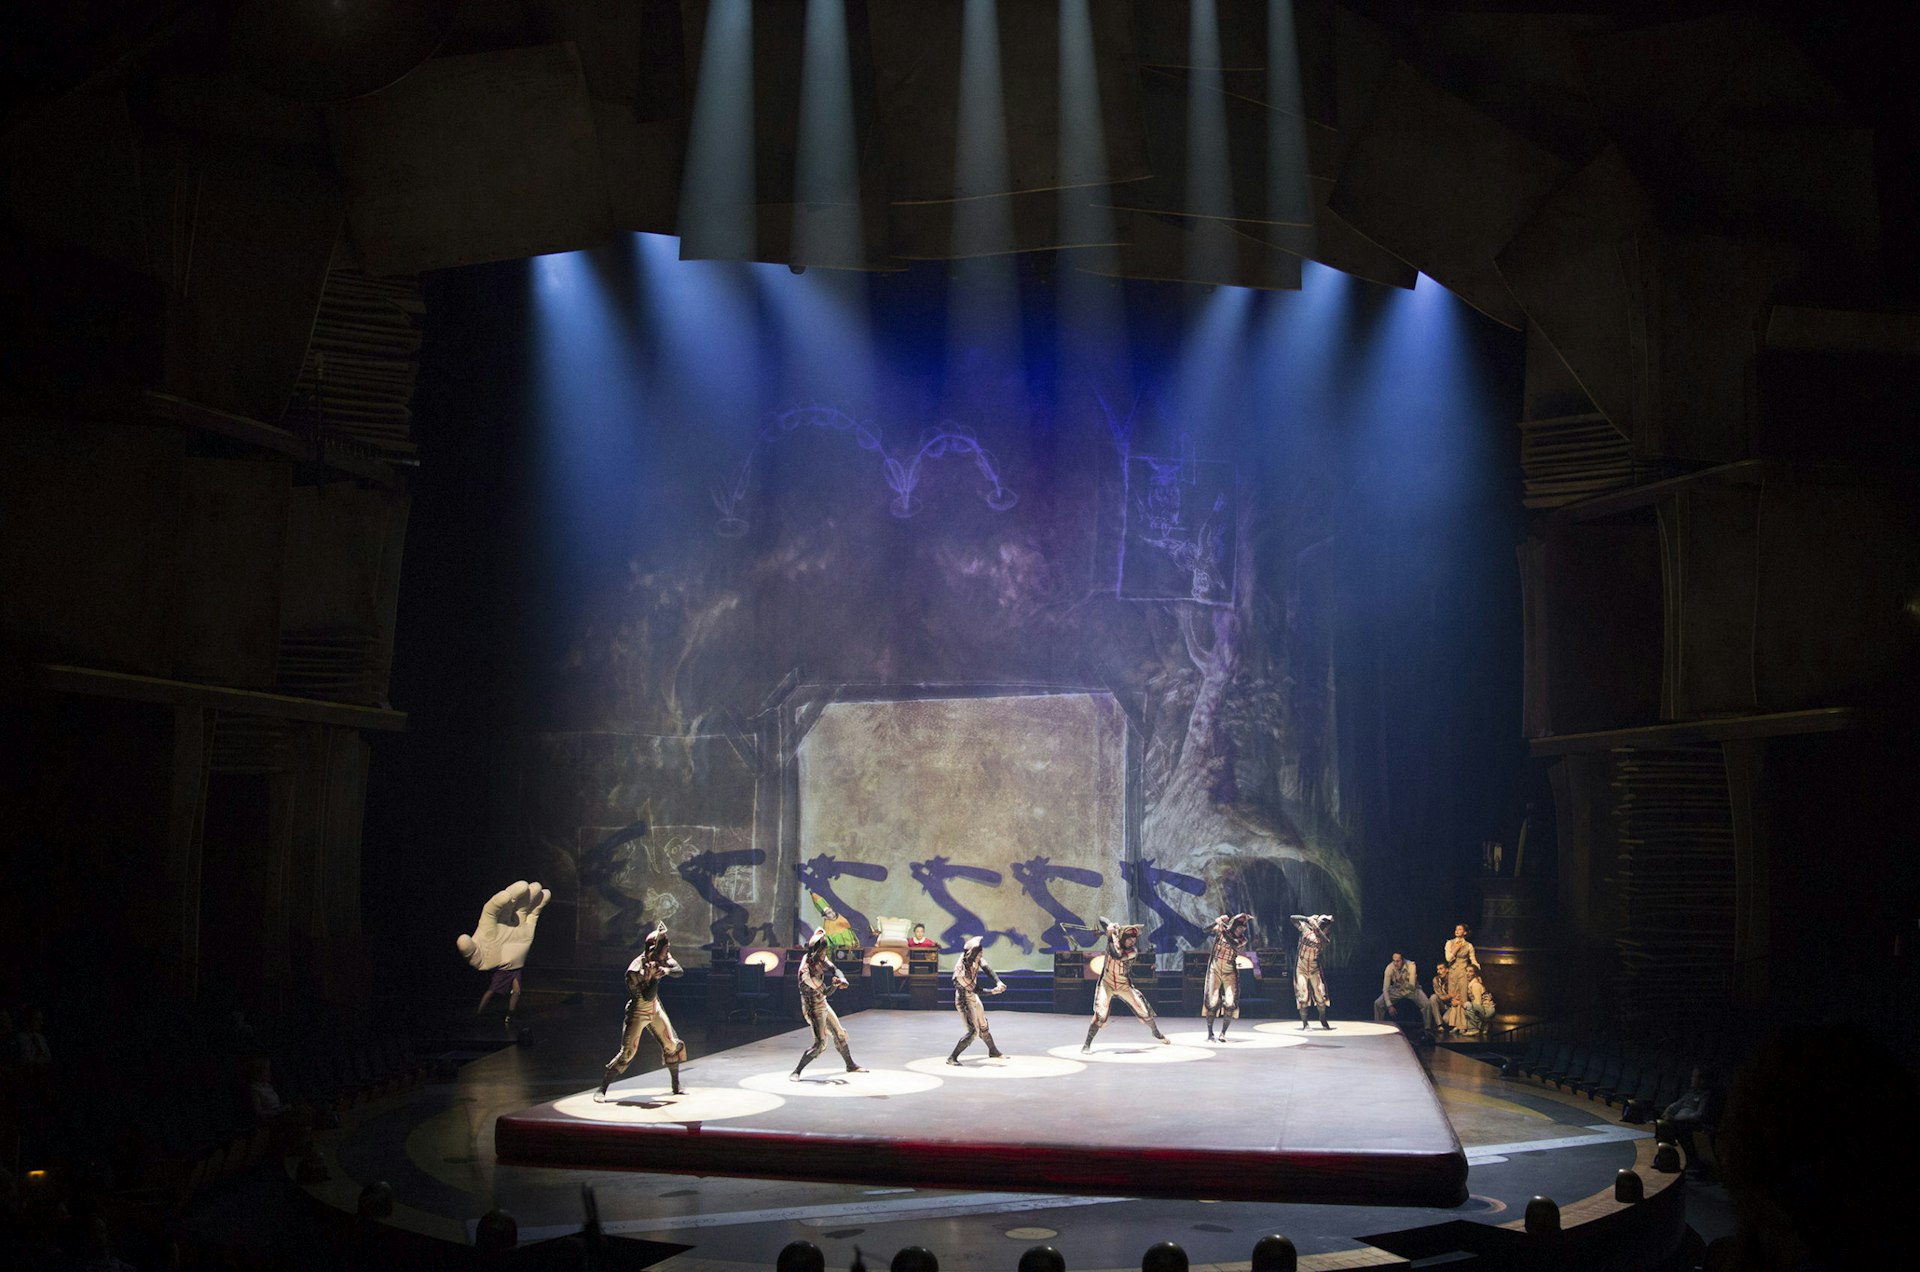 Cirque du Soleil performers on stage